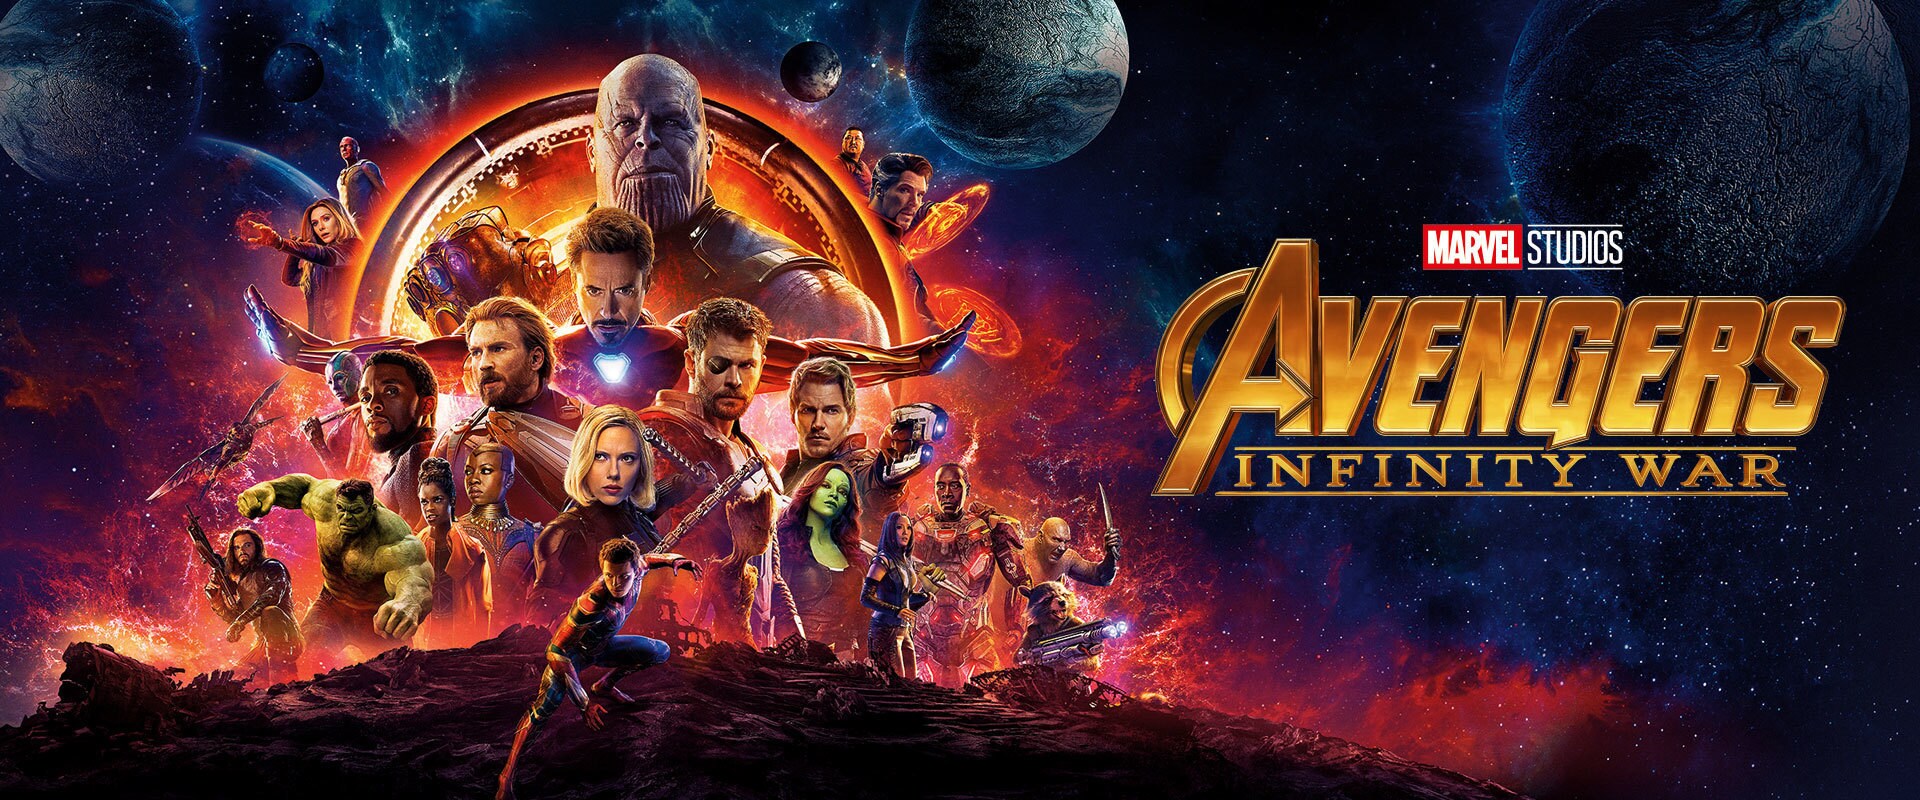 Marvel Studios' Avengers: Infinity War | Disney Movies | Singapore